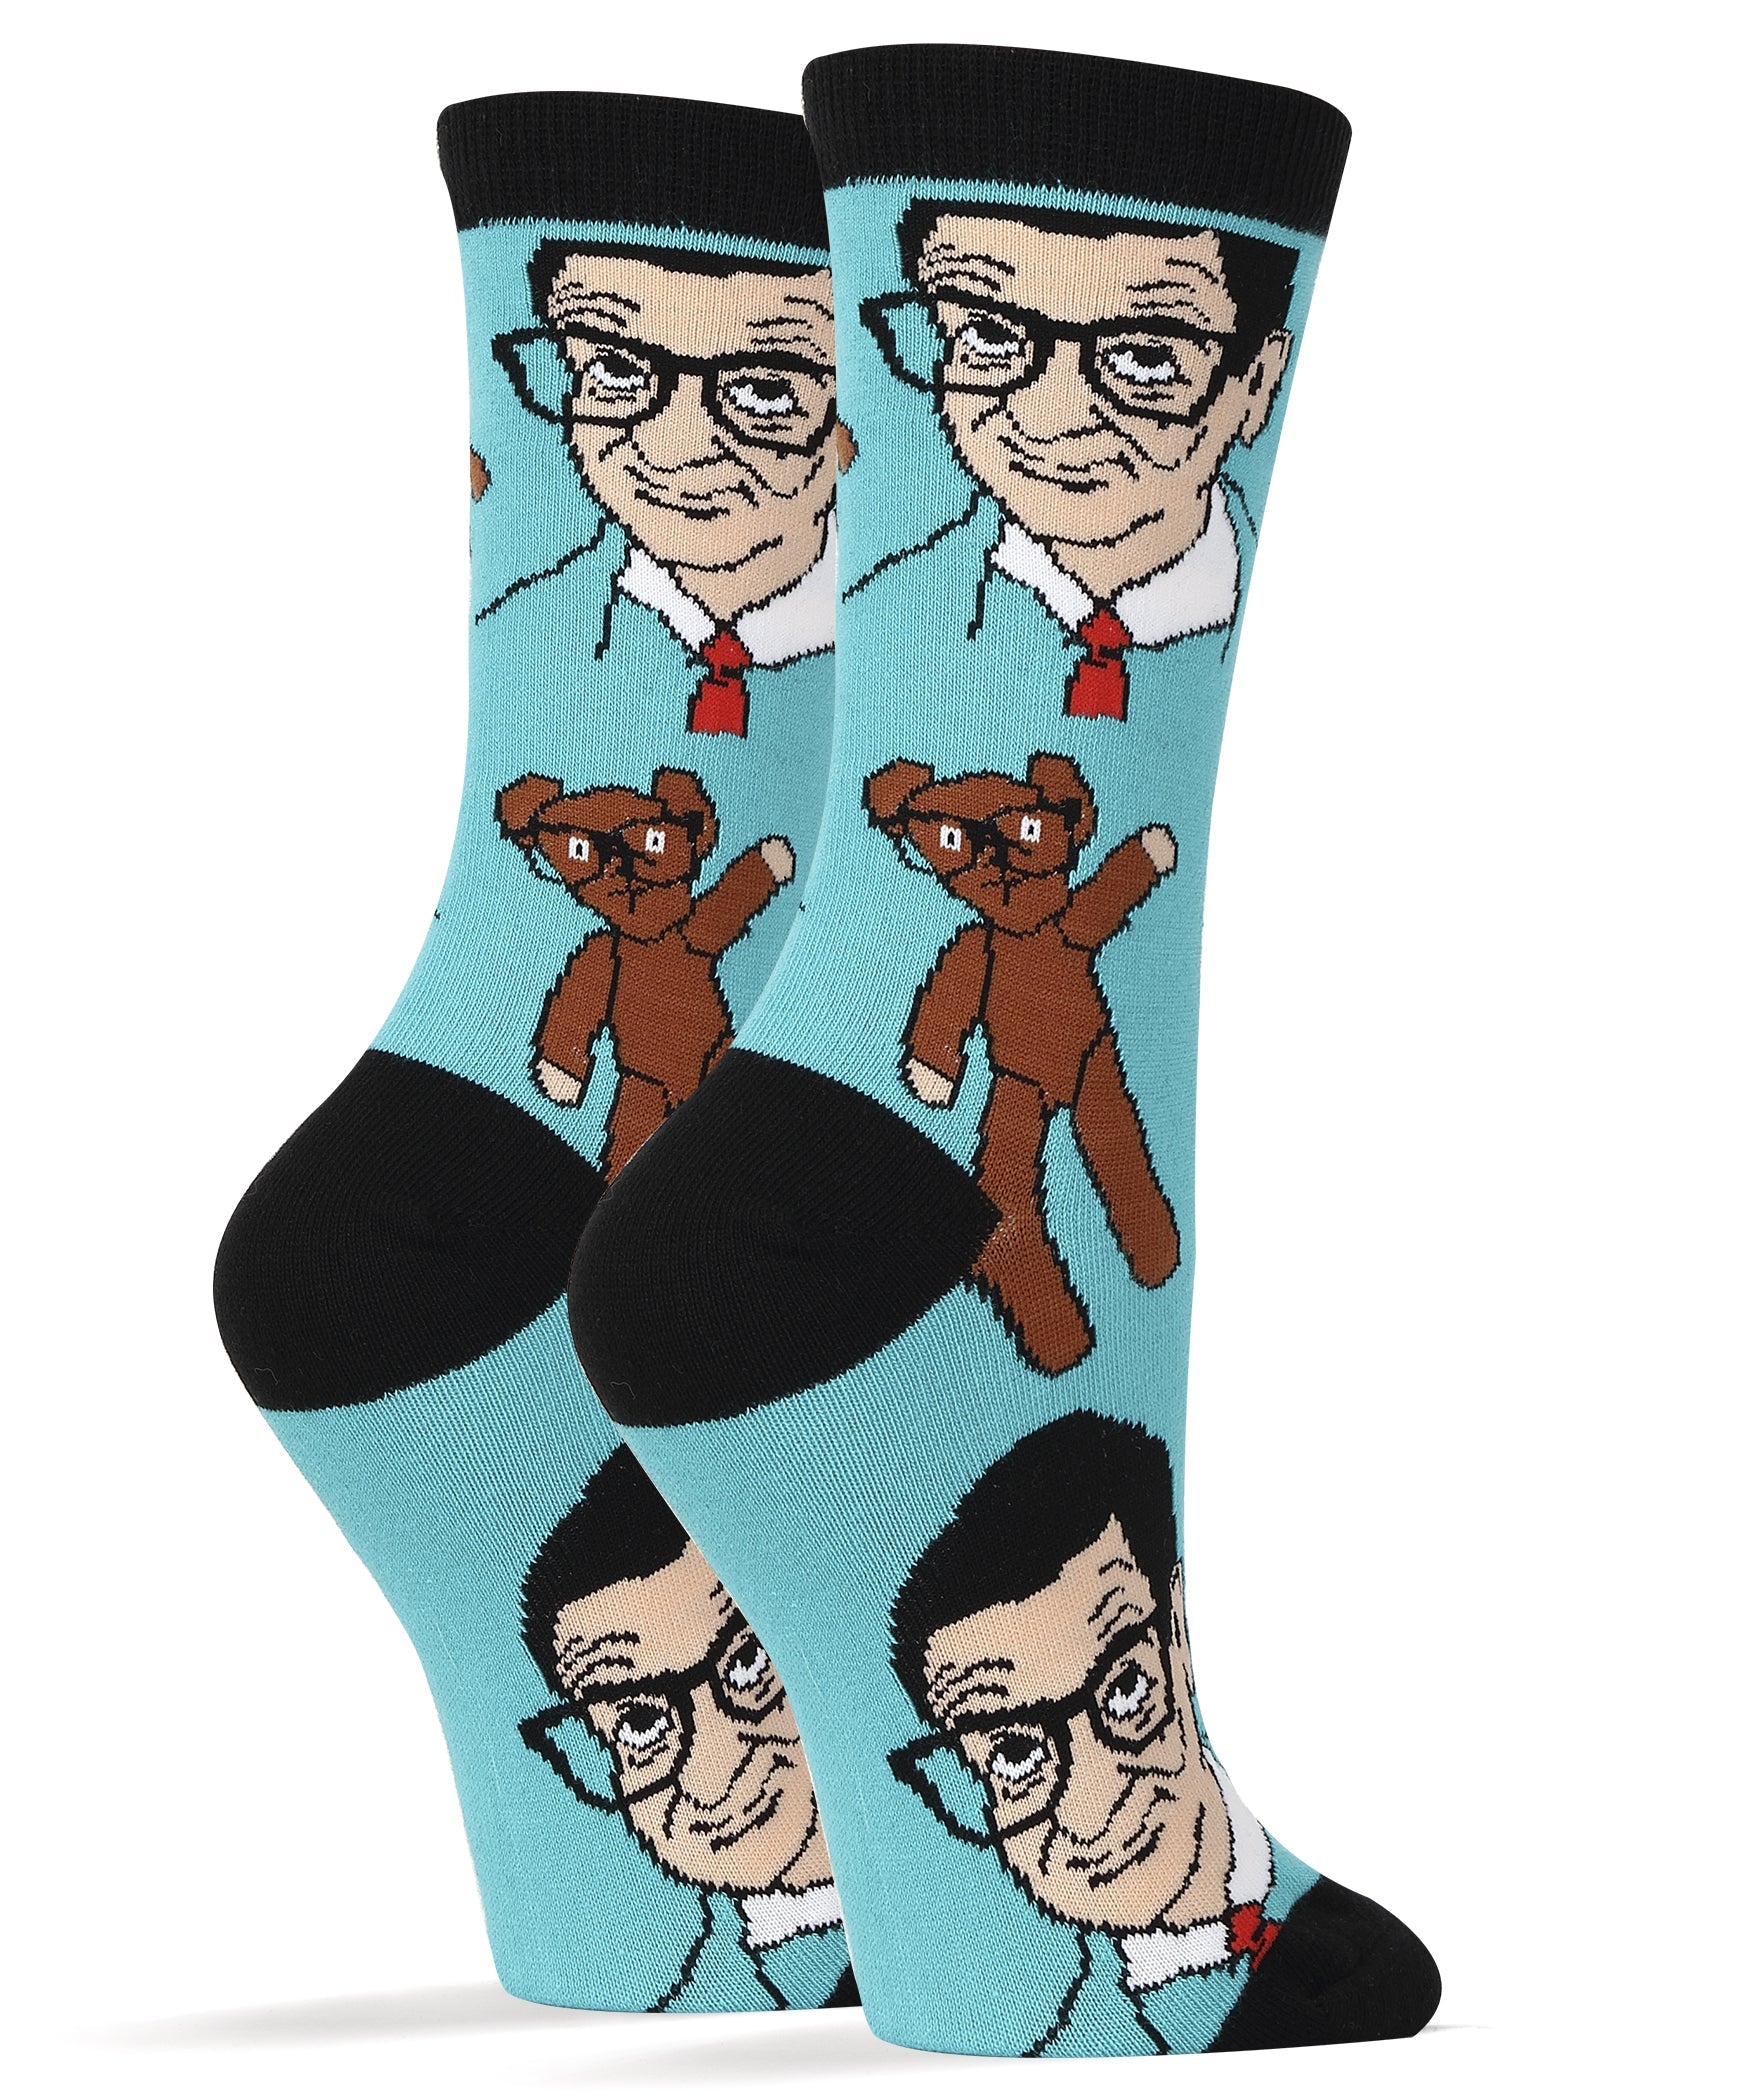 mr-bean-and-teddy-womens-crew-socks-2-oooh-yeah-socks